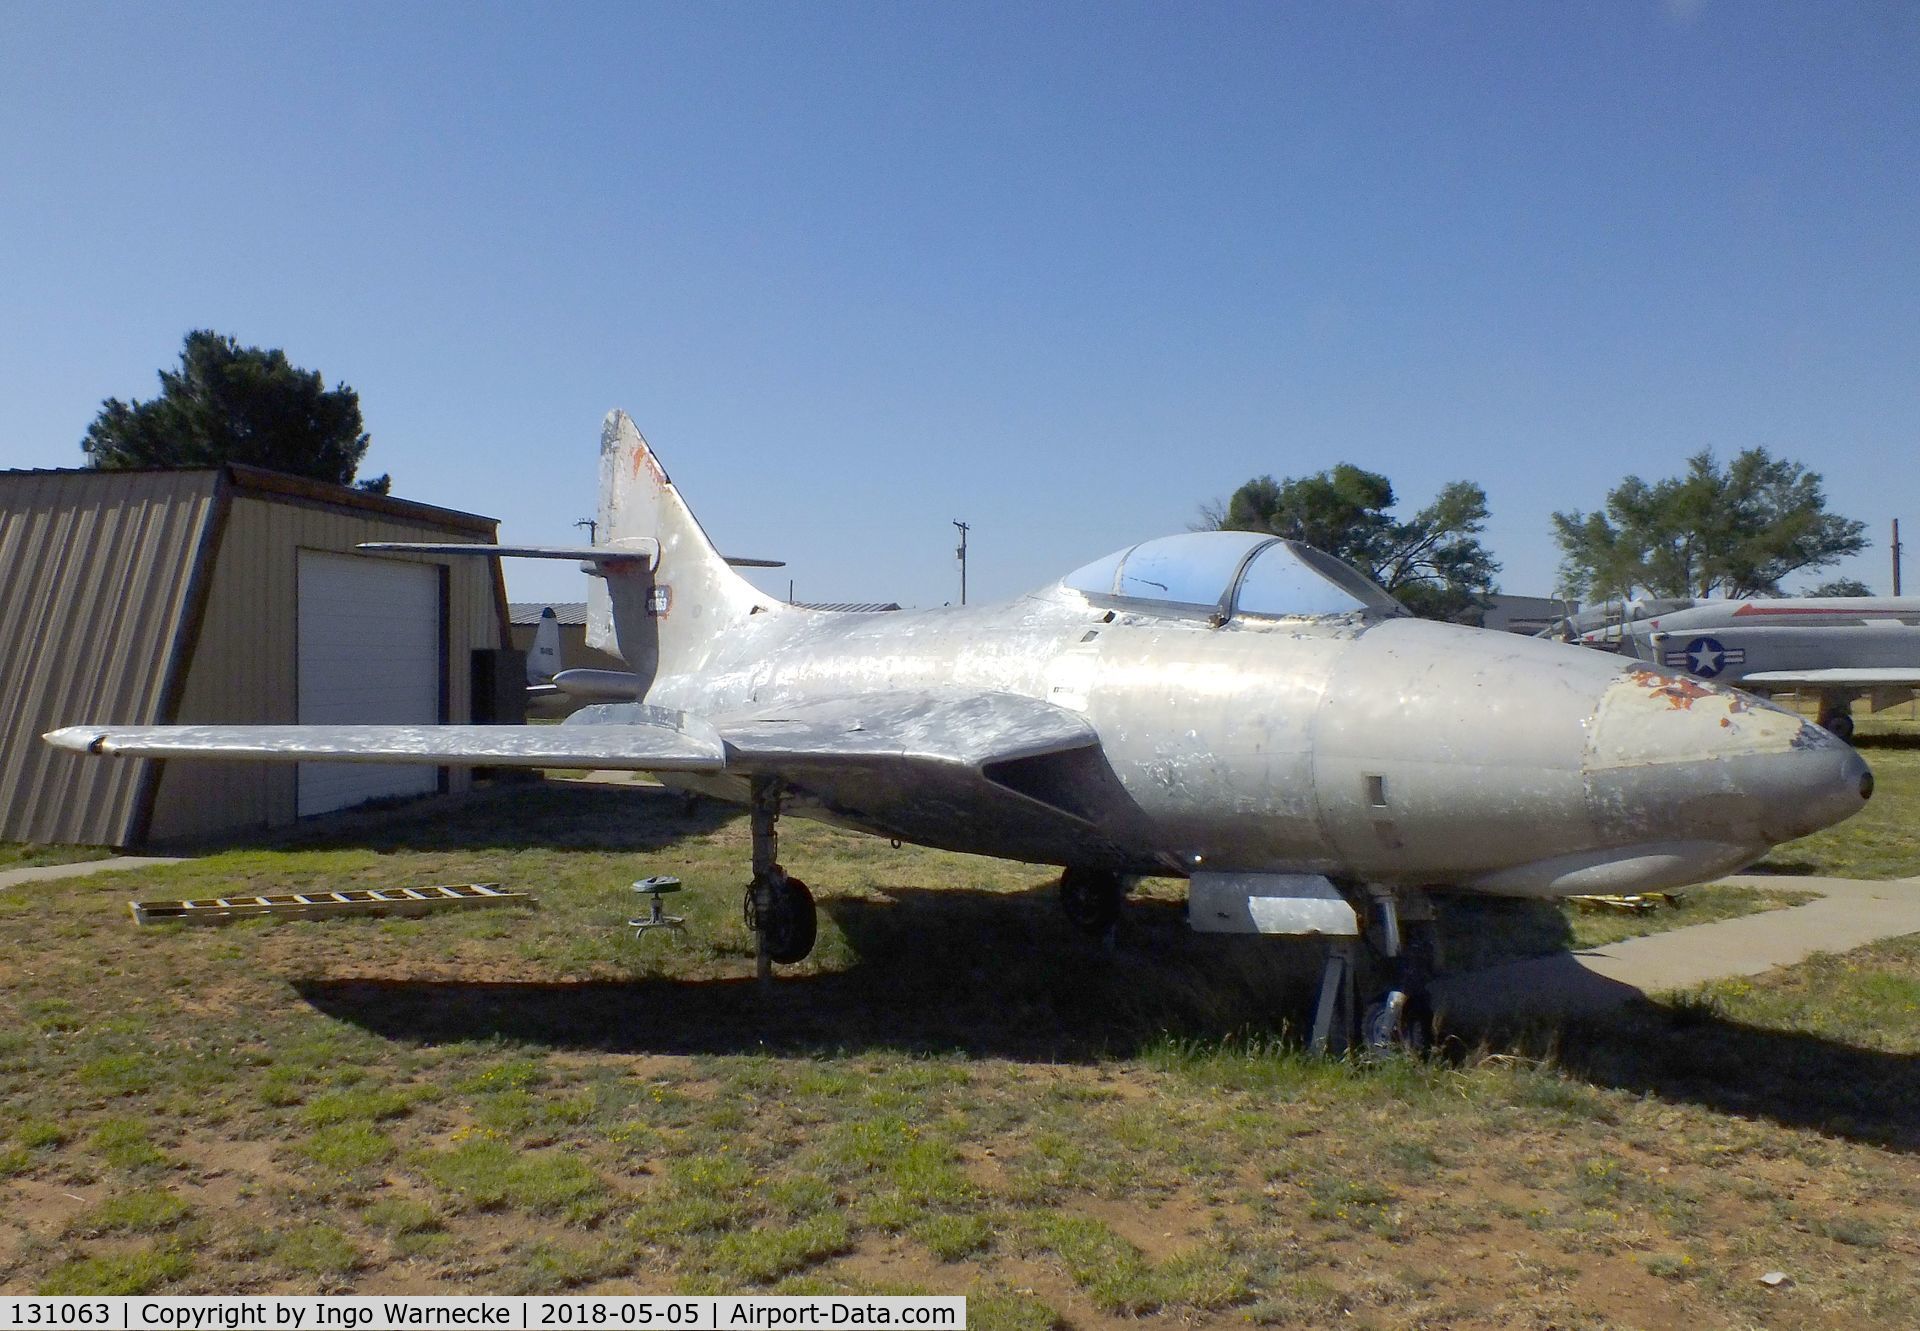 131063, Grumman F9F-8 Cougar C/N Not found 131063, Grumman F9F-8 Cougar, being restored at the Texas Air Museum Caprock Chapter, Slaton TX